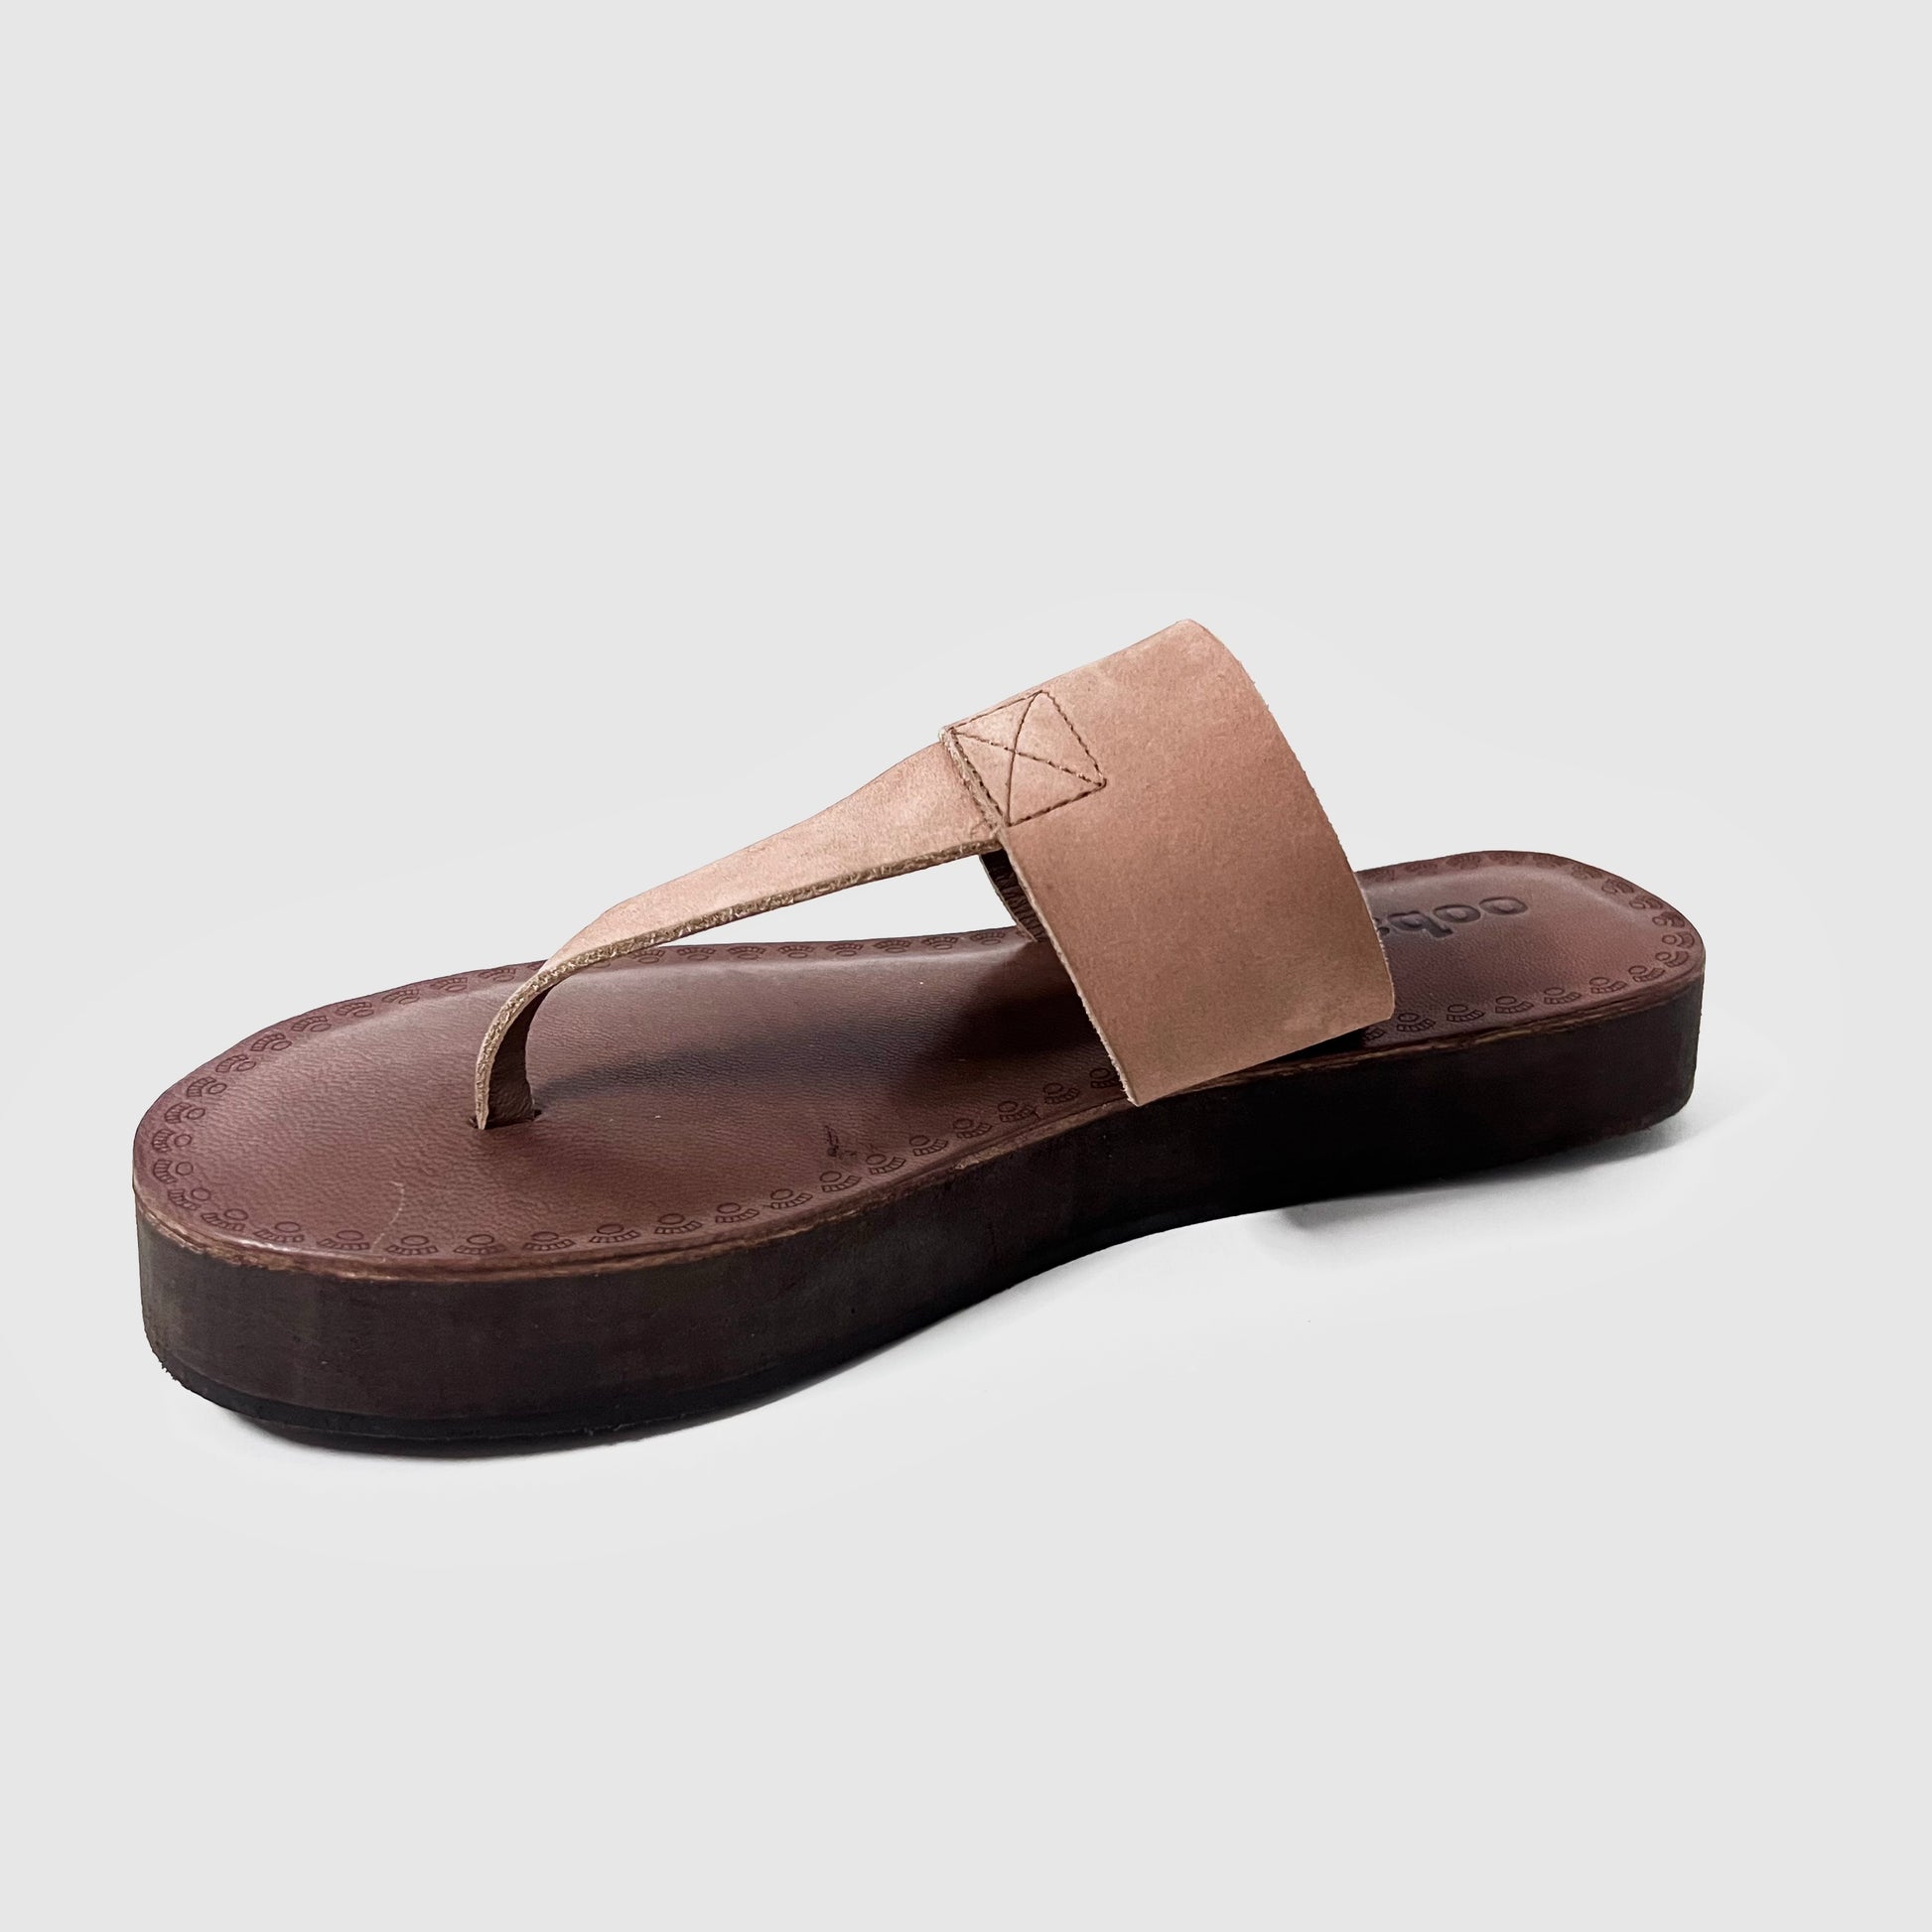 oobash Katherine tan brown leather thong sandal for ladies girl women